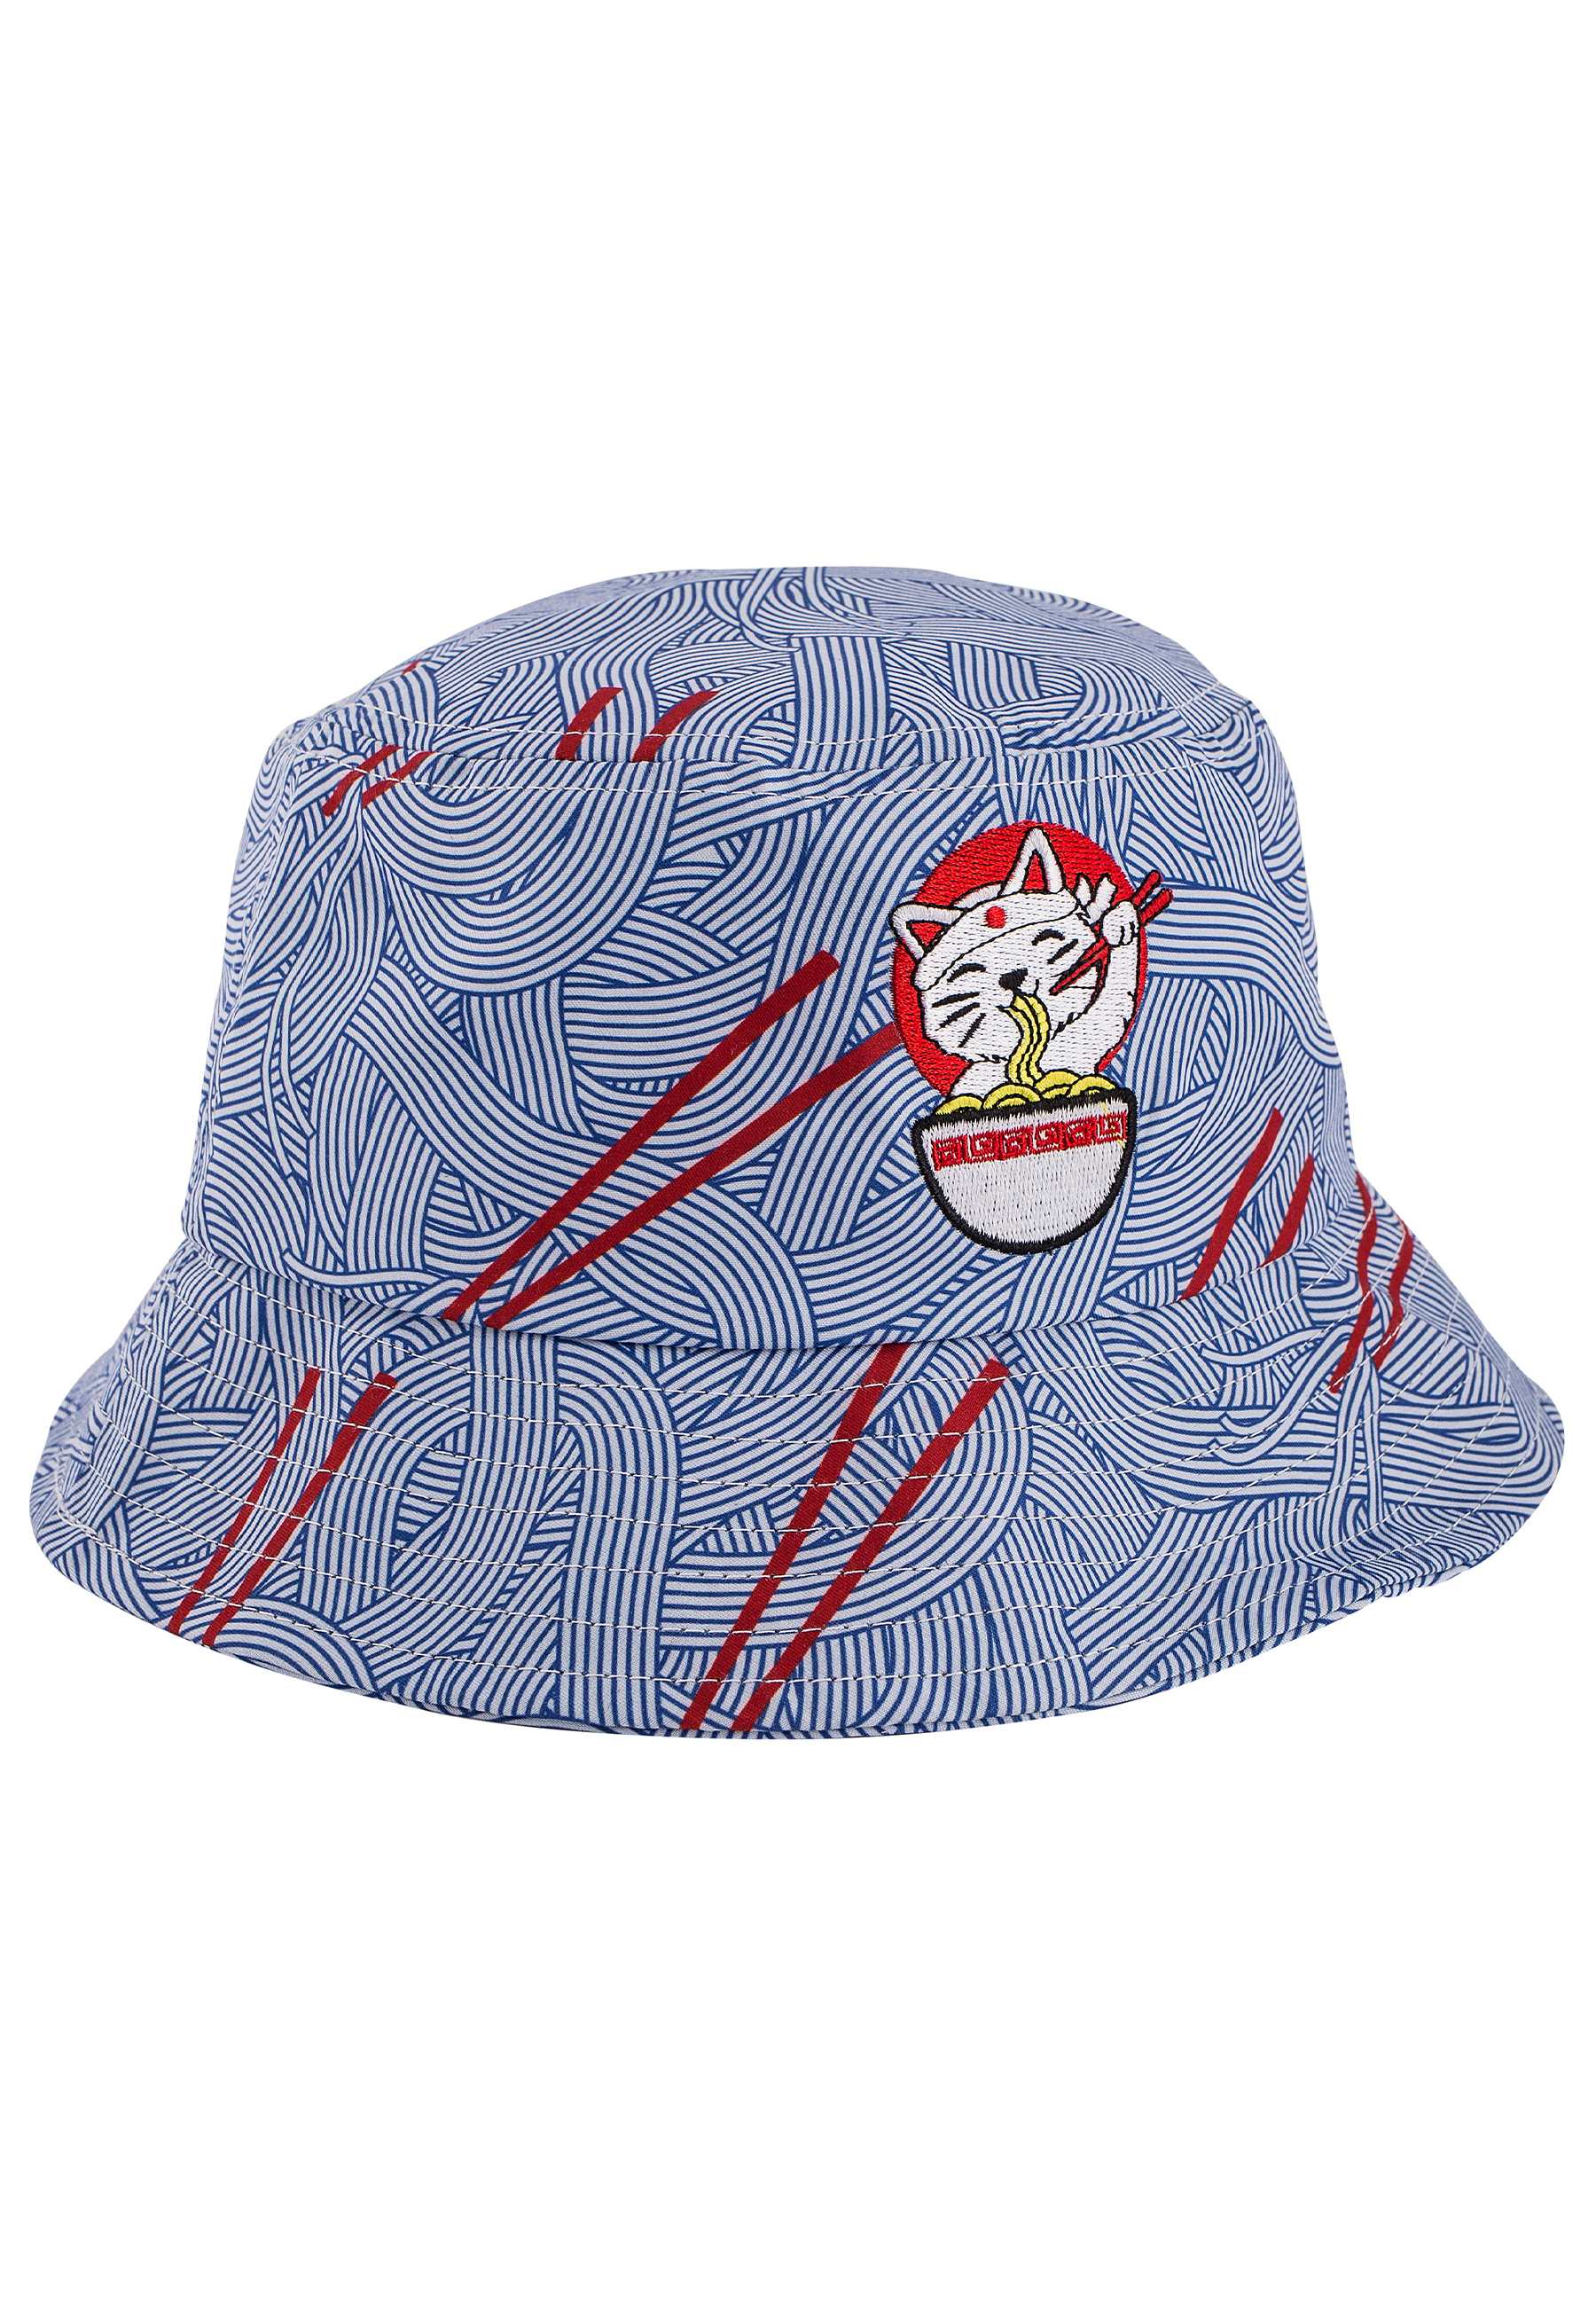 Yagi Mika Ramen Noodle Soup Beef Flavor Unisex Novelty Bucket Hat Graffiti Fishmen Cap Fashion Outdoor Accessories 